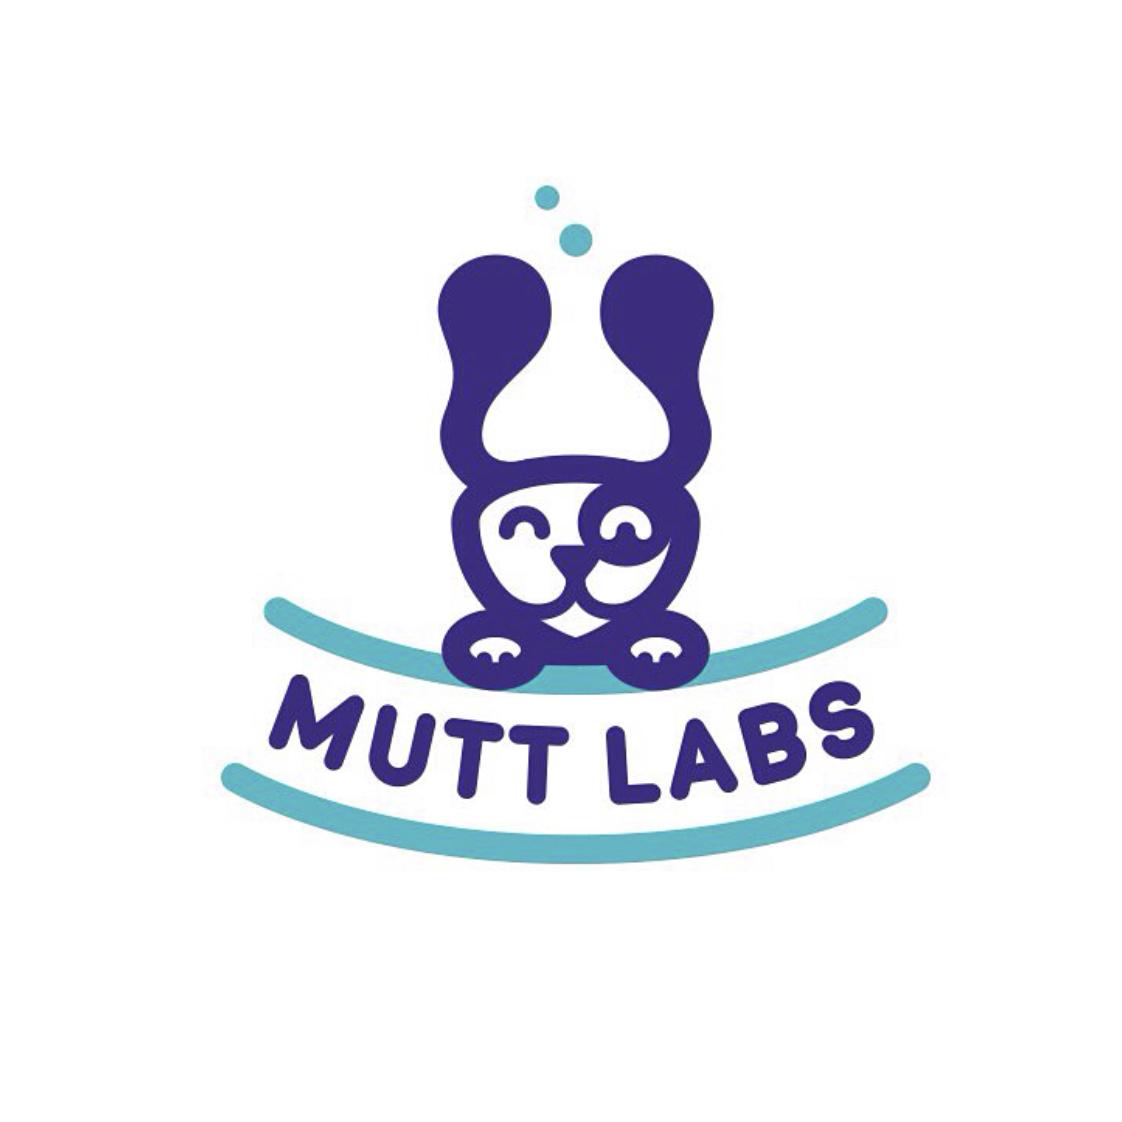 MUTT LABS医院服务商标转让费用买卖交易流程